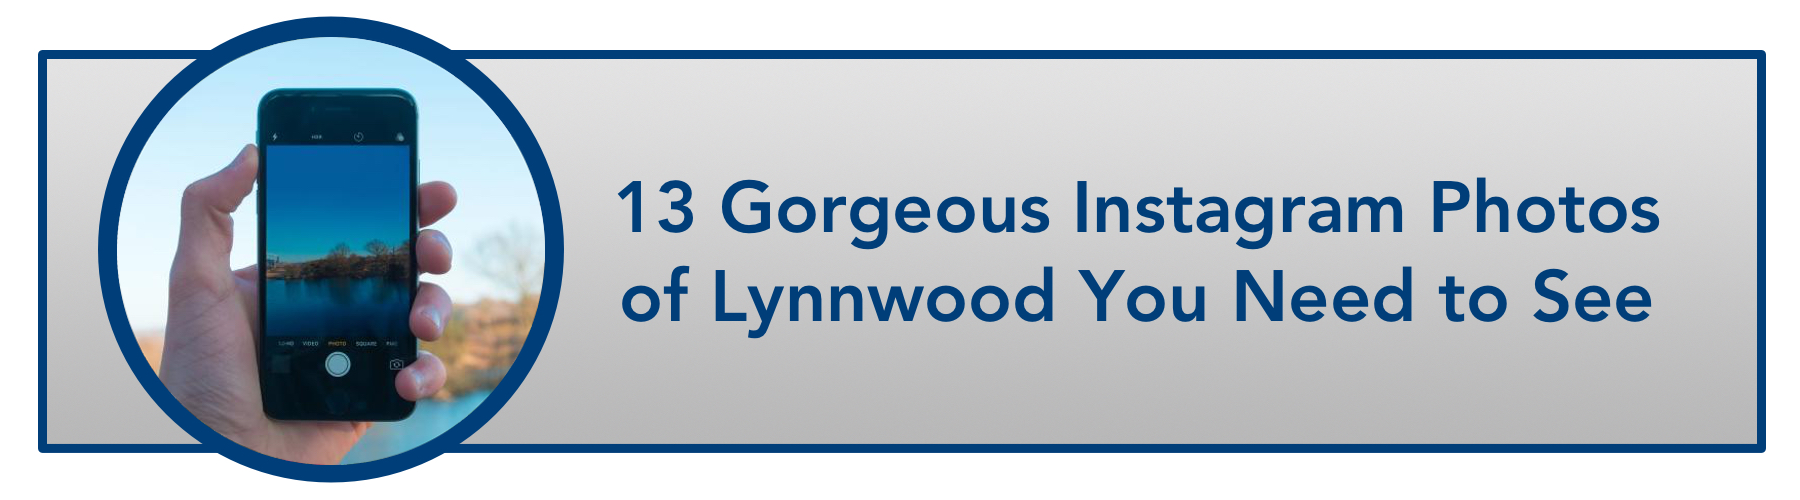 WindermereNorth_Lynnwood_13 Gorgeous Instagram Photos of Lynnwood You Need to See